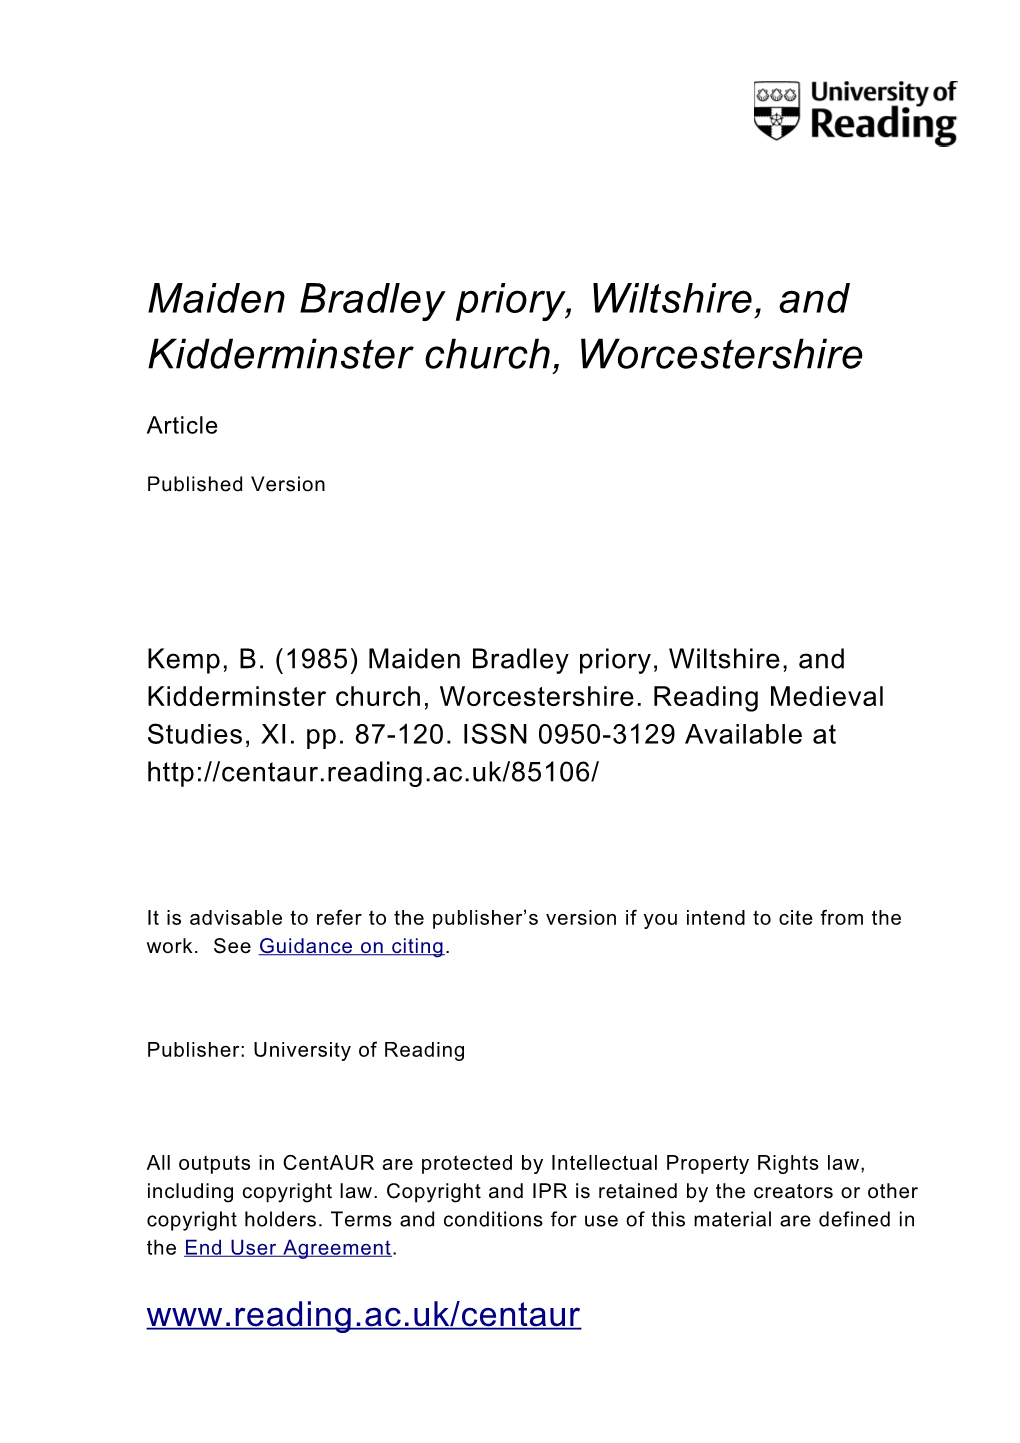 Maiden Bradley Priory, Wiltshire, and Kidderminster Church, Worcestershire